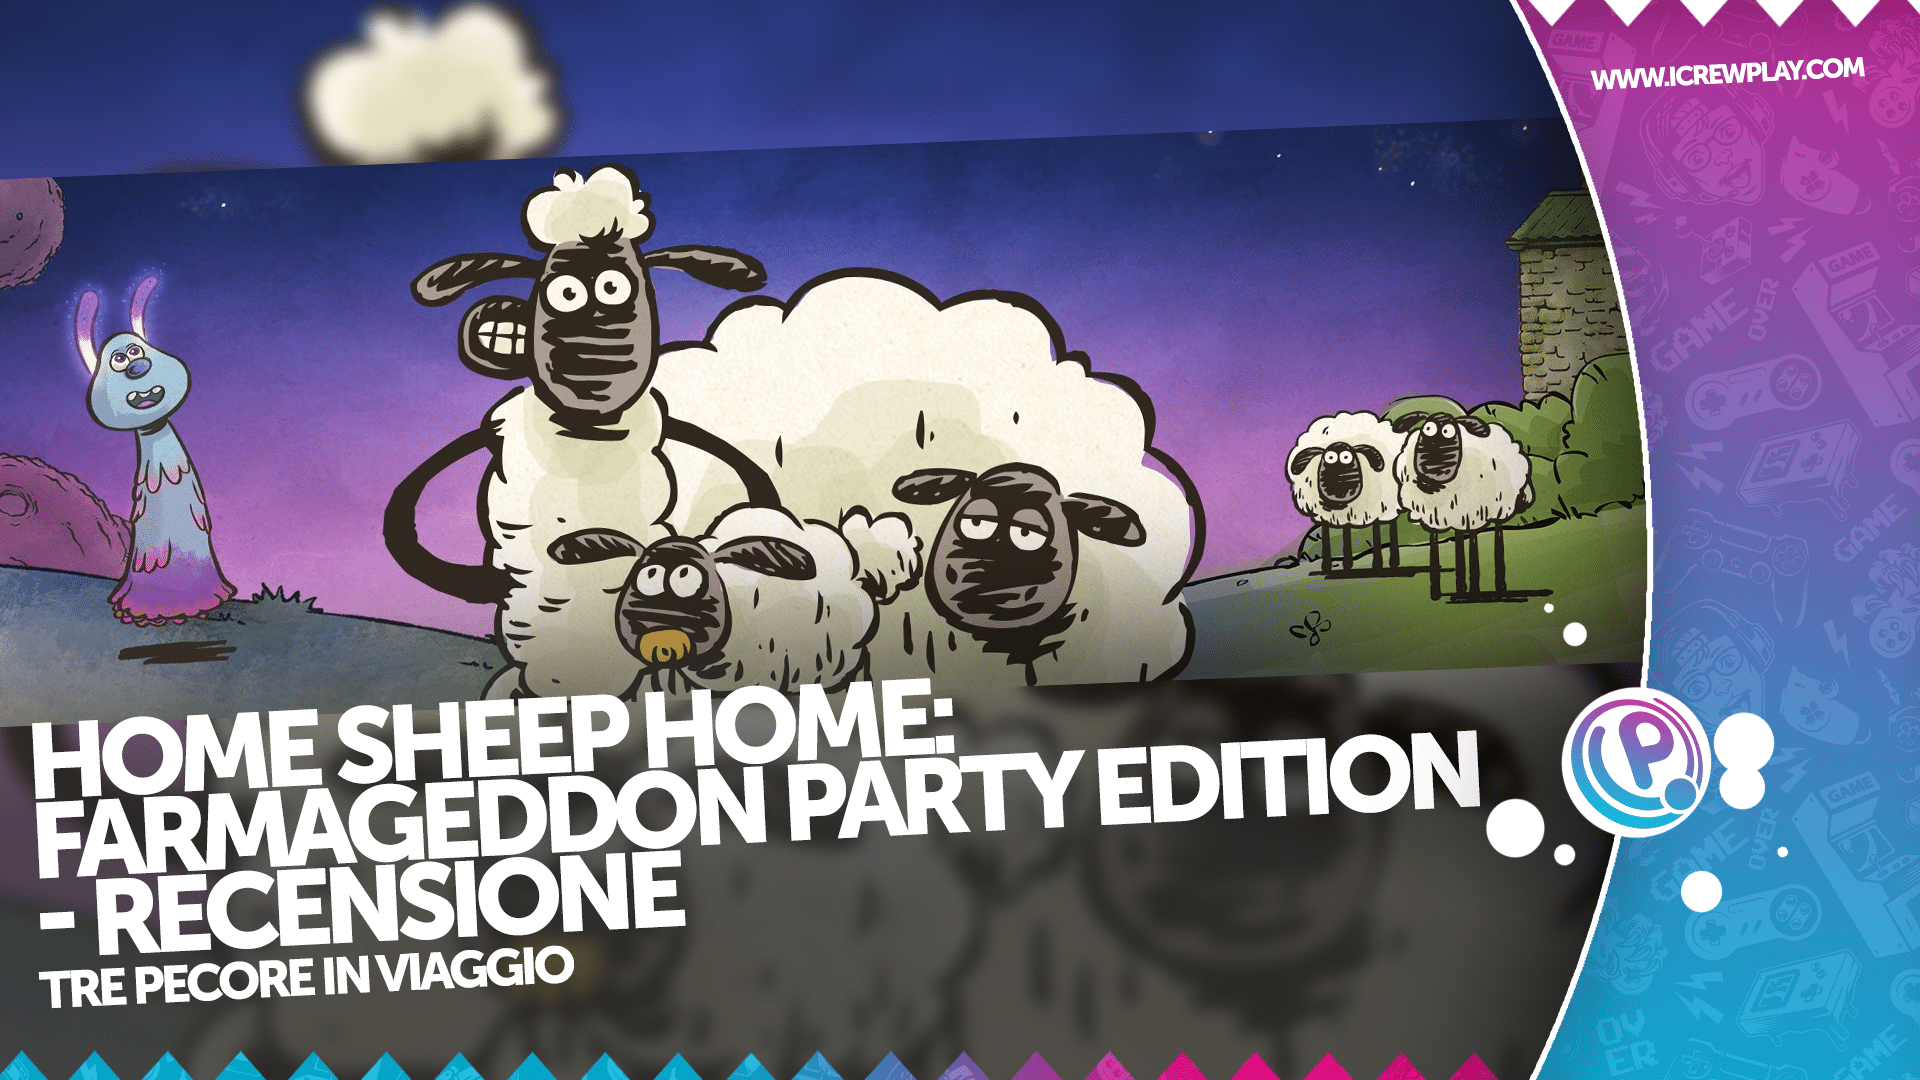 Home Sheep Home: Farmageddon Party Edition recensione